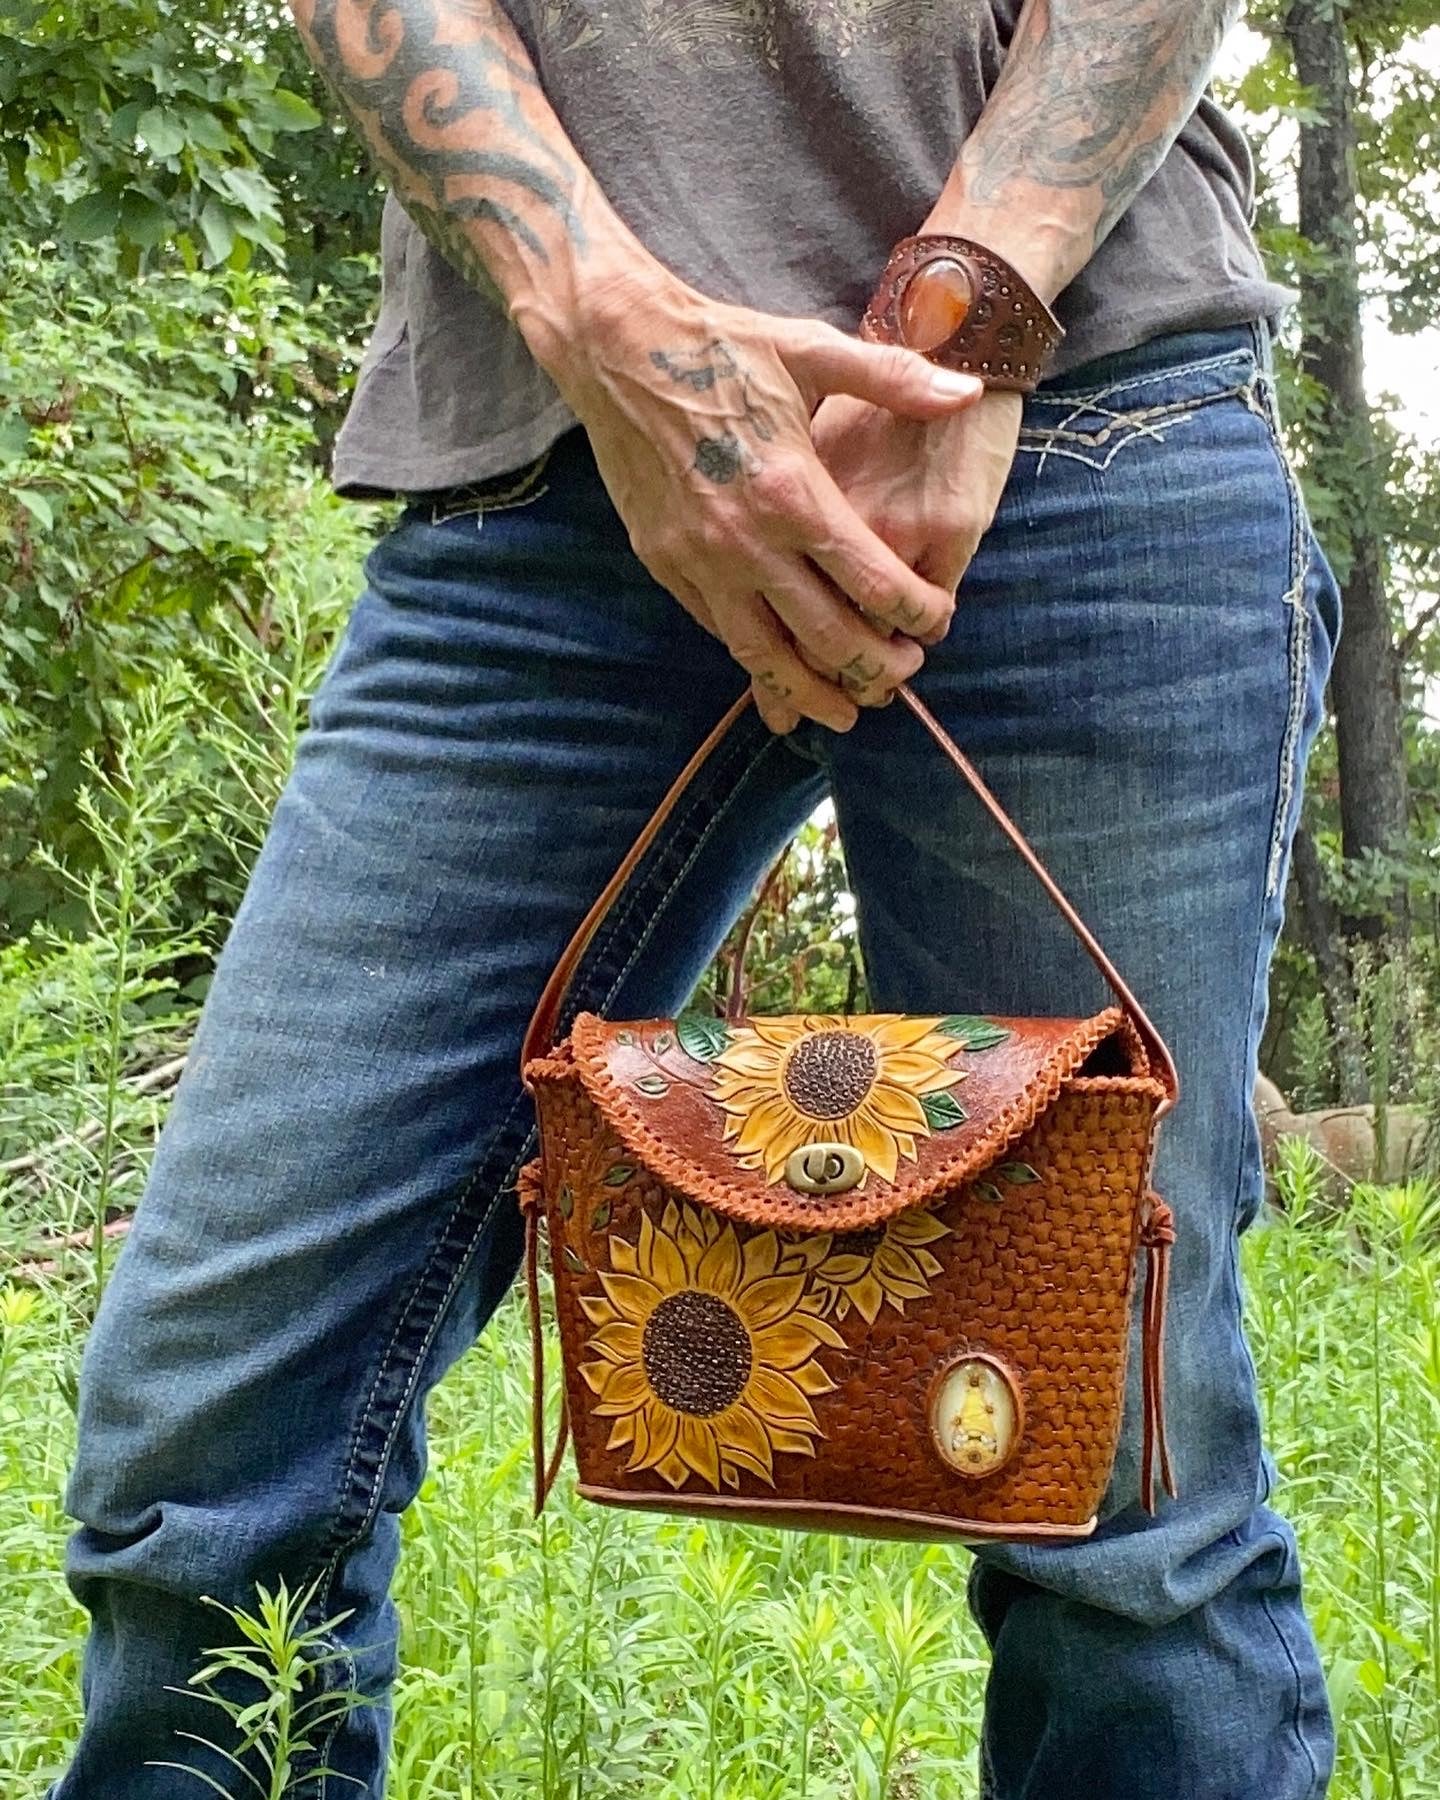 Sunflower bucket purse